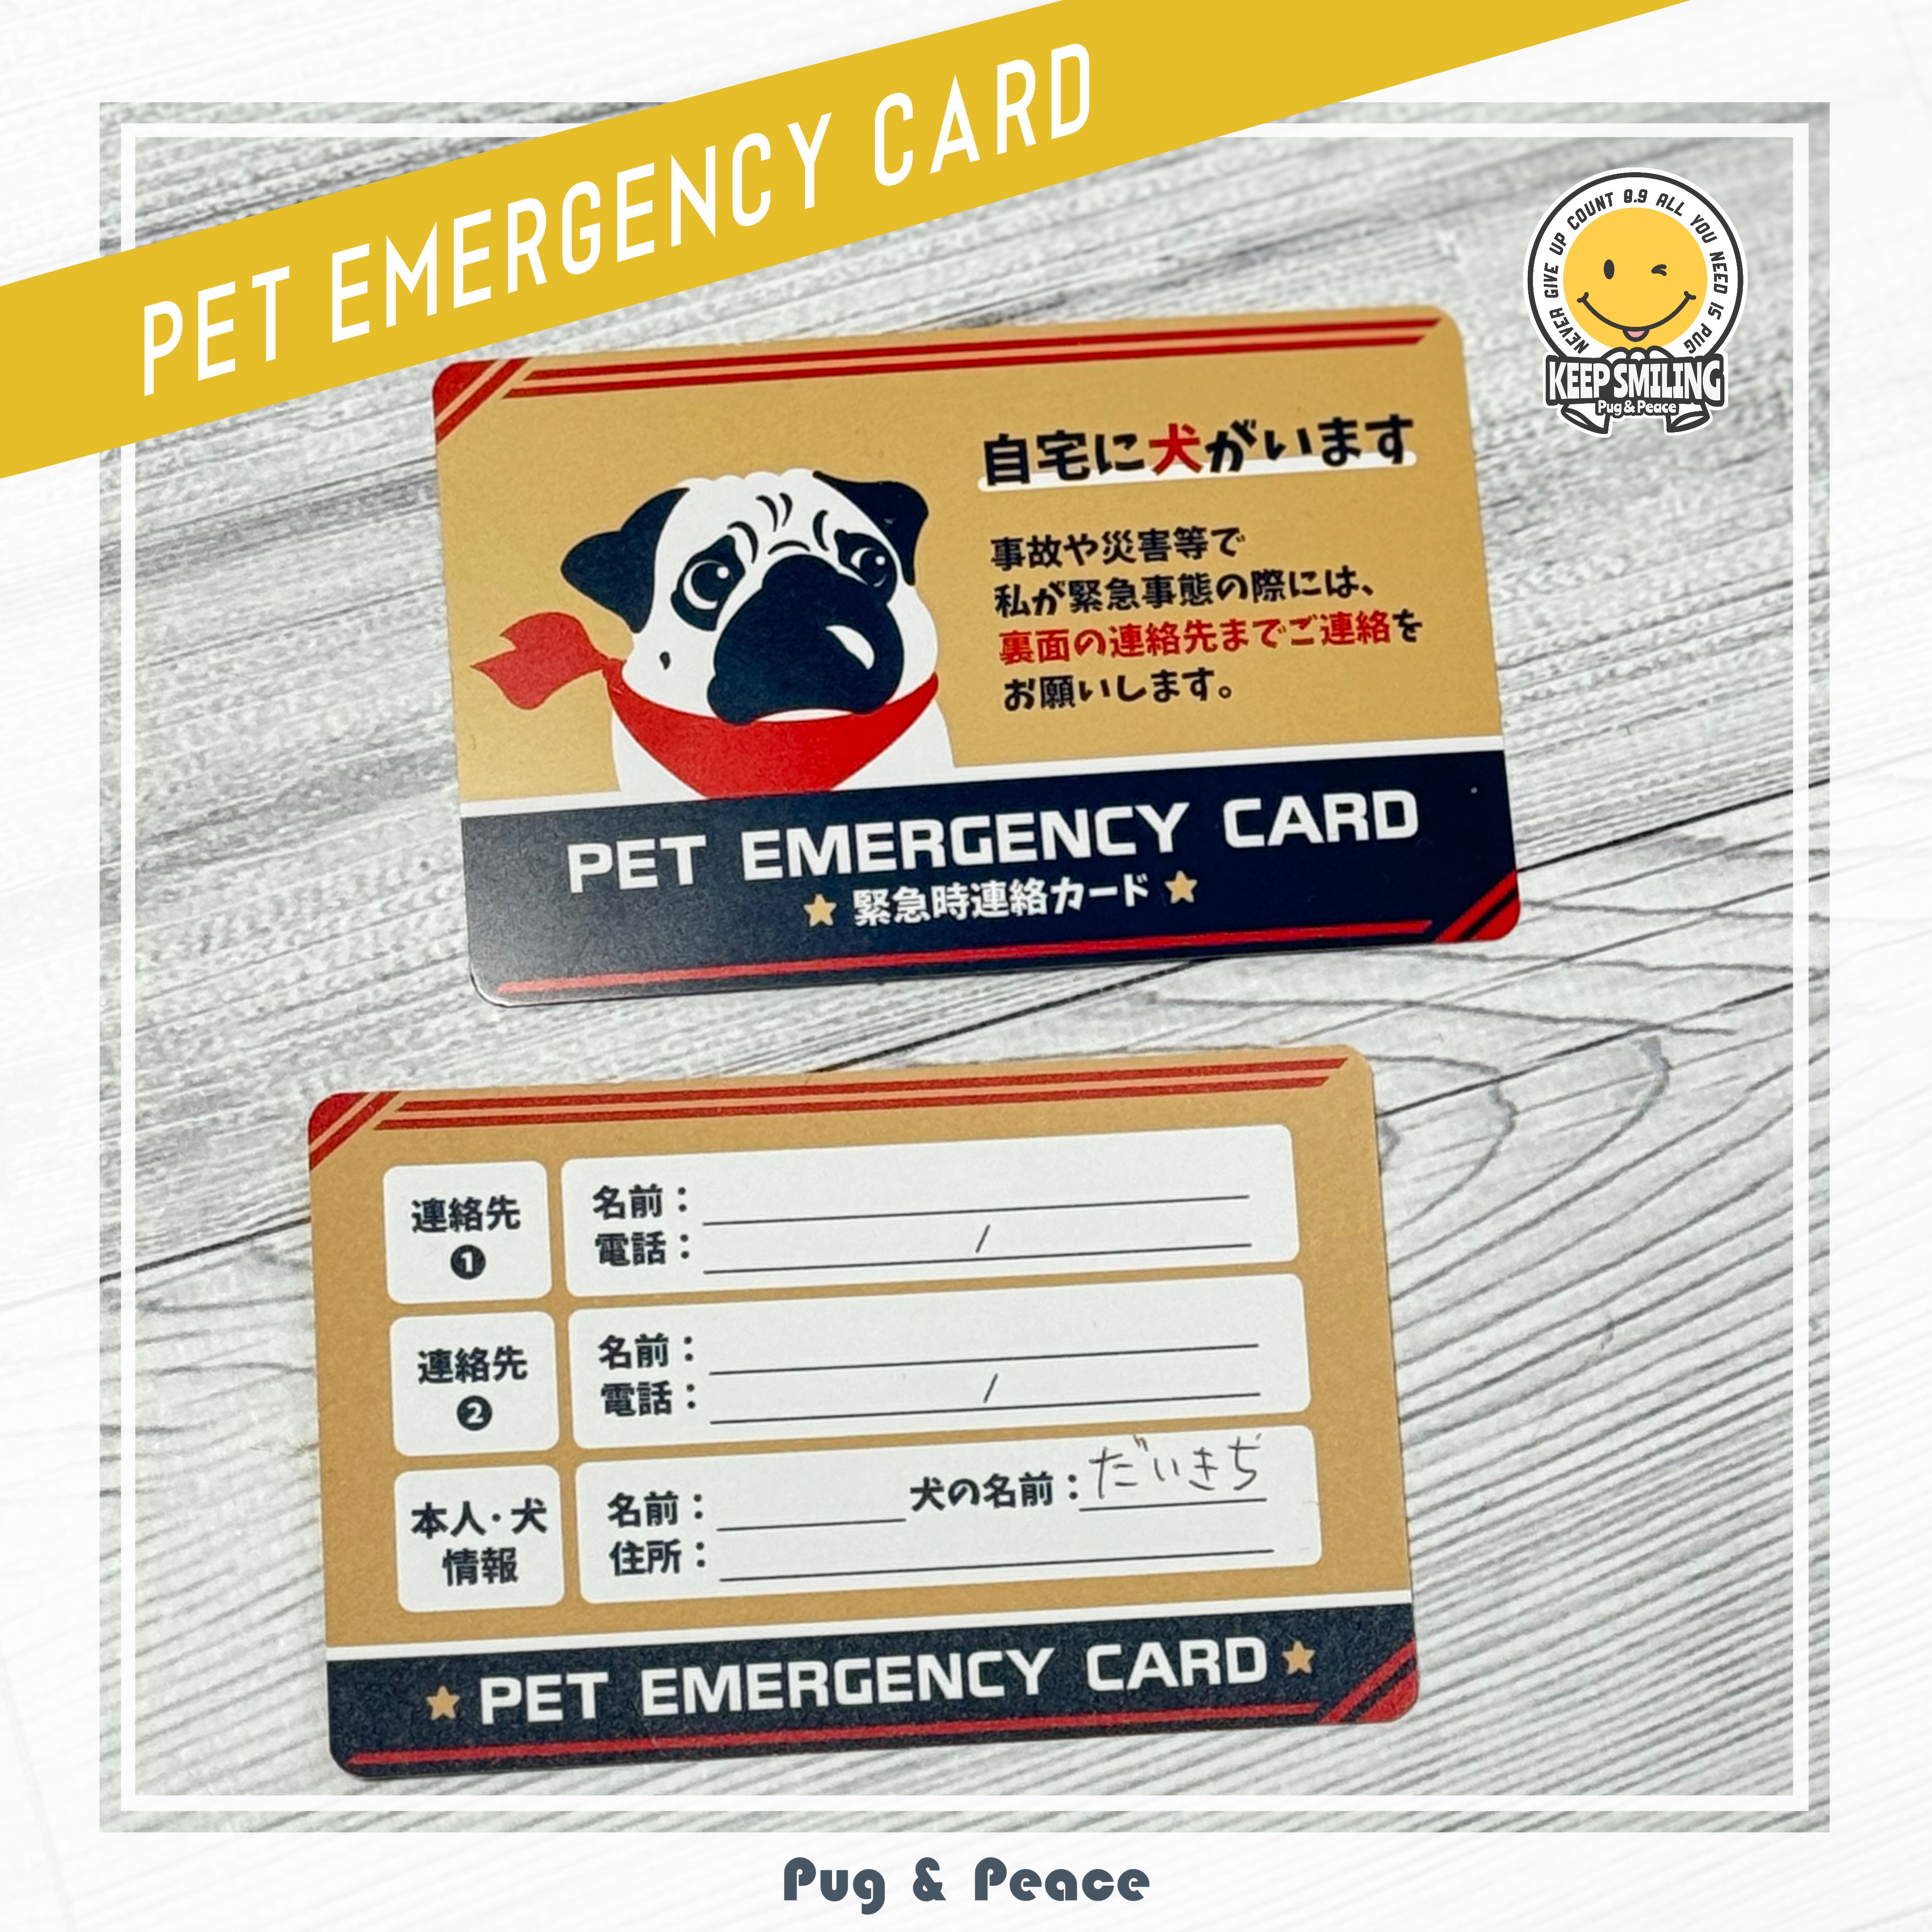 Pet Emergency Cardオプションについて